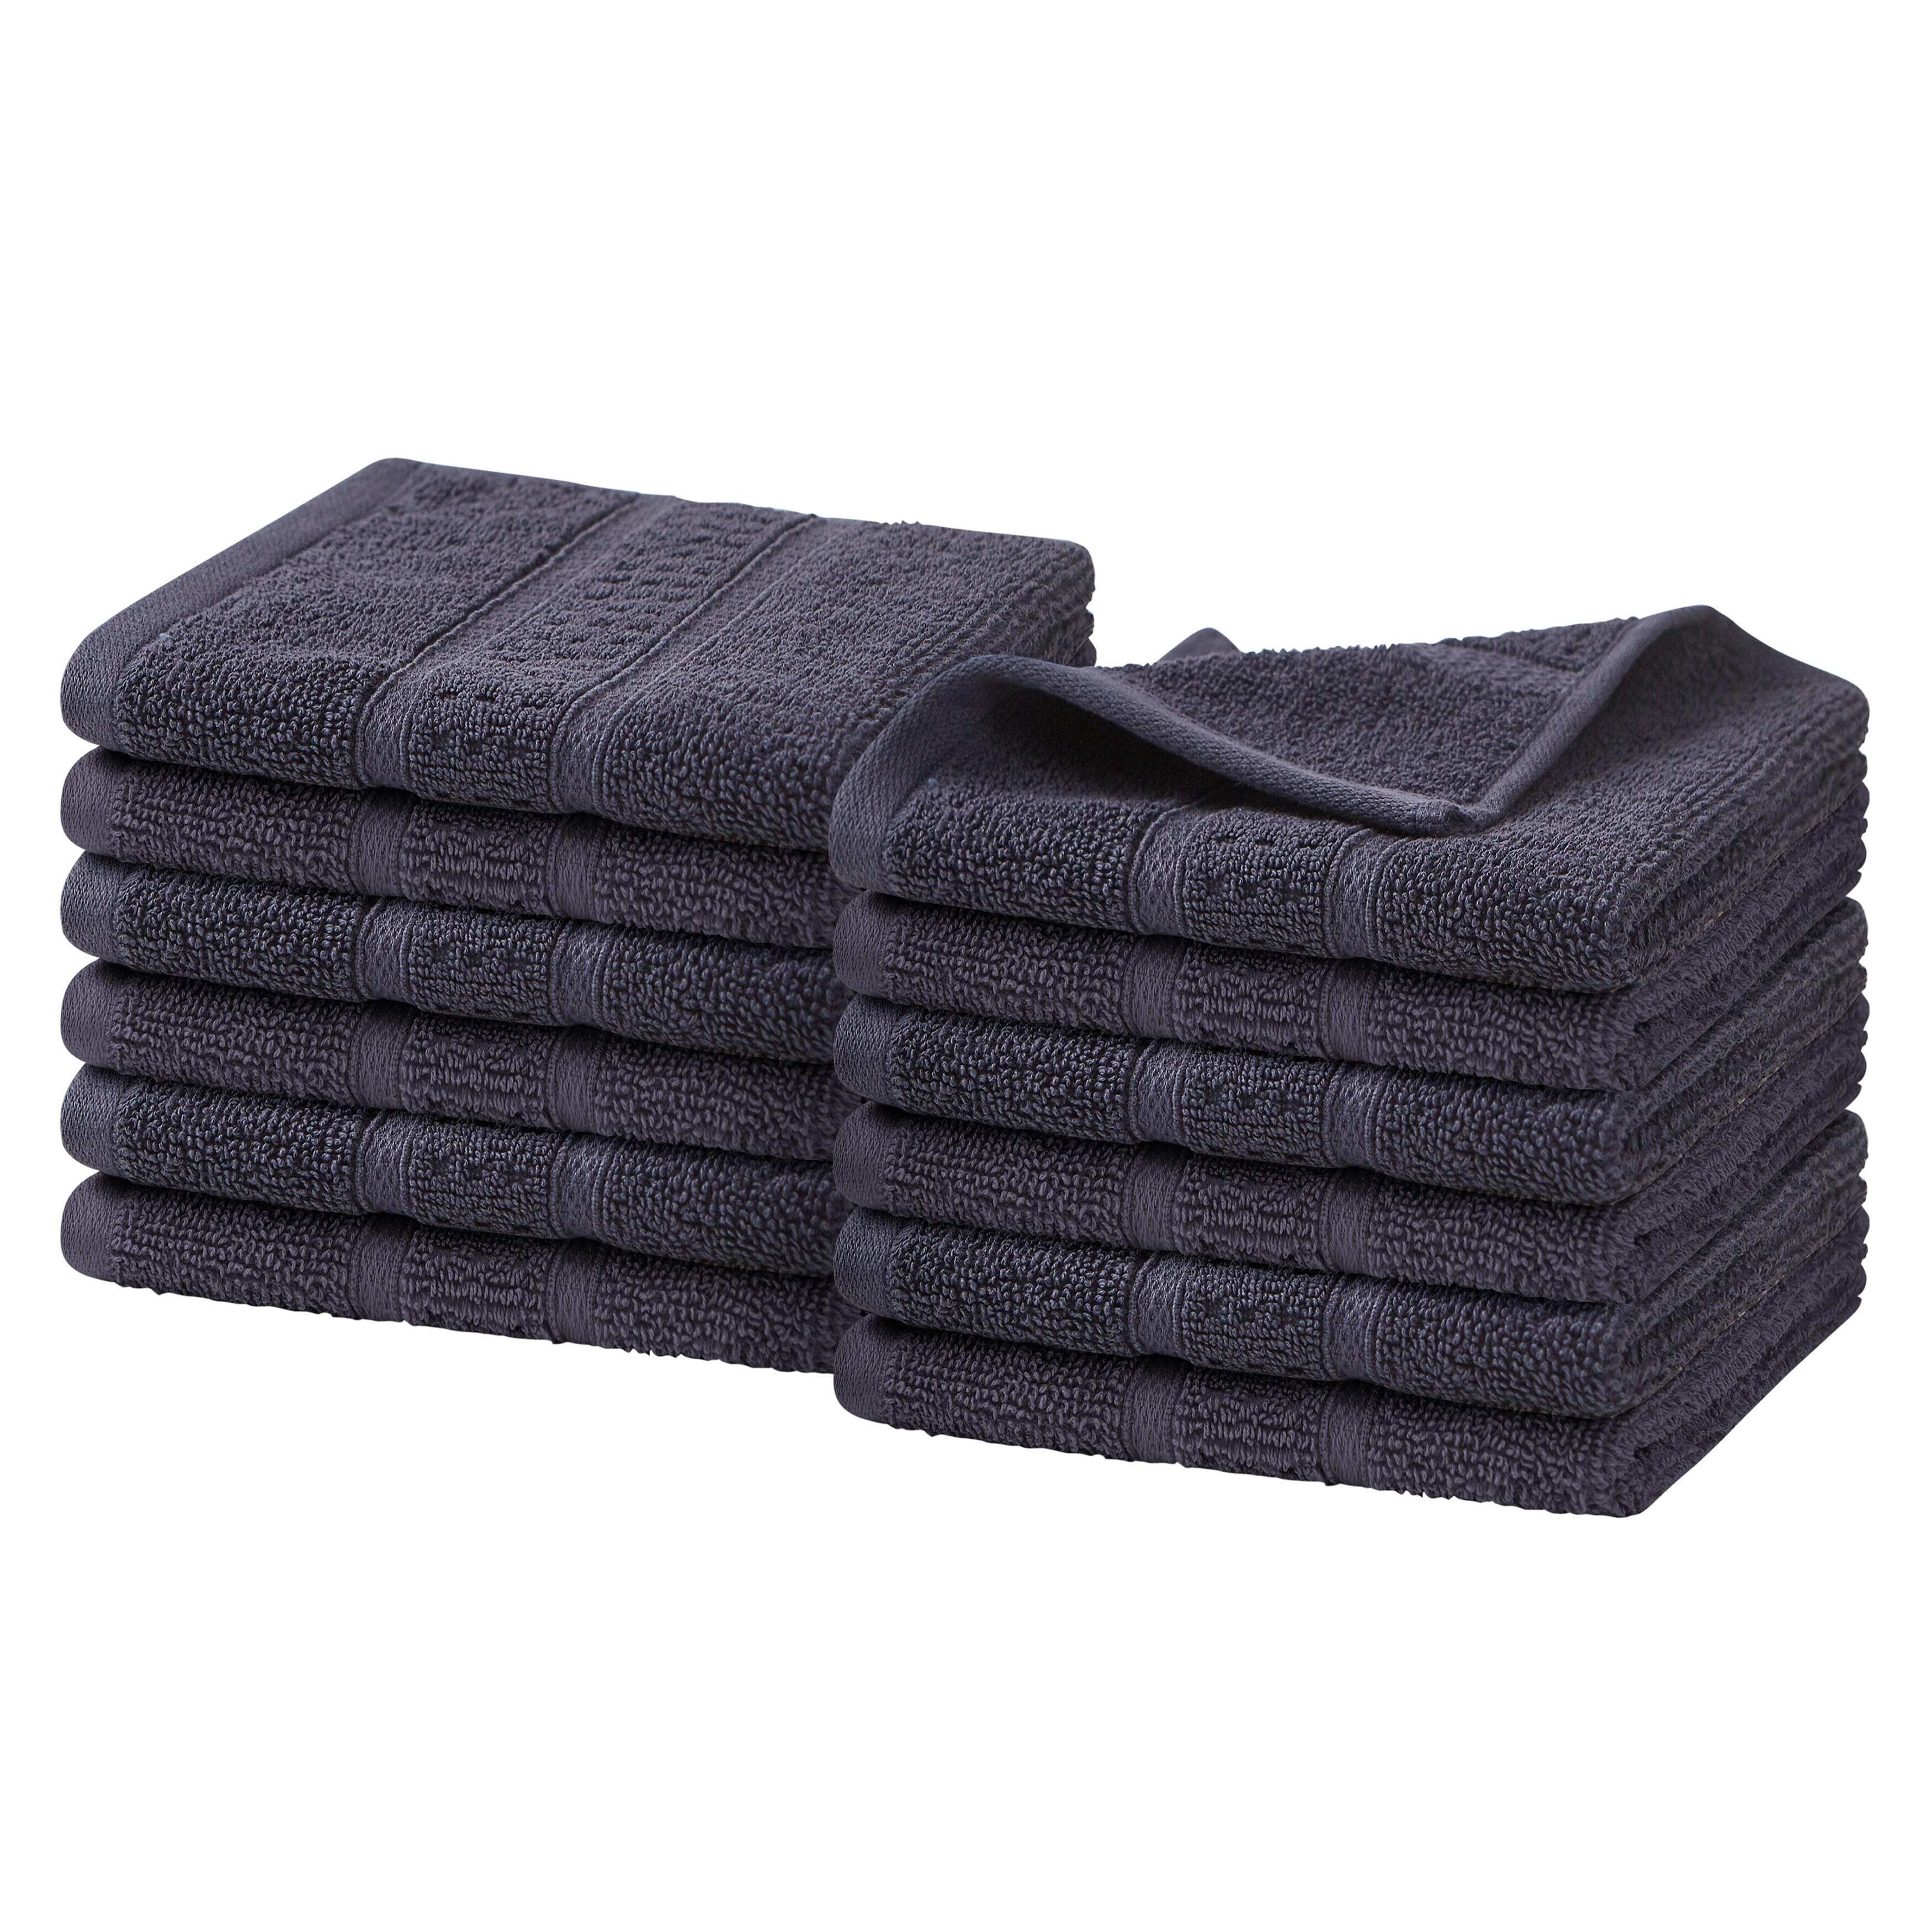 Nautica- Bath Towels, Absorbent & Fade Resistant Cotton Towel Set,  Fashionable Bathroom Decor (Oceane Turquoise, 2 Piece)